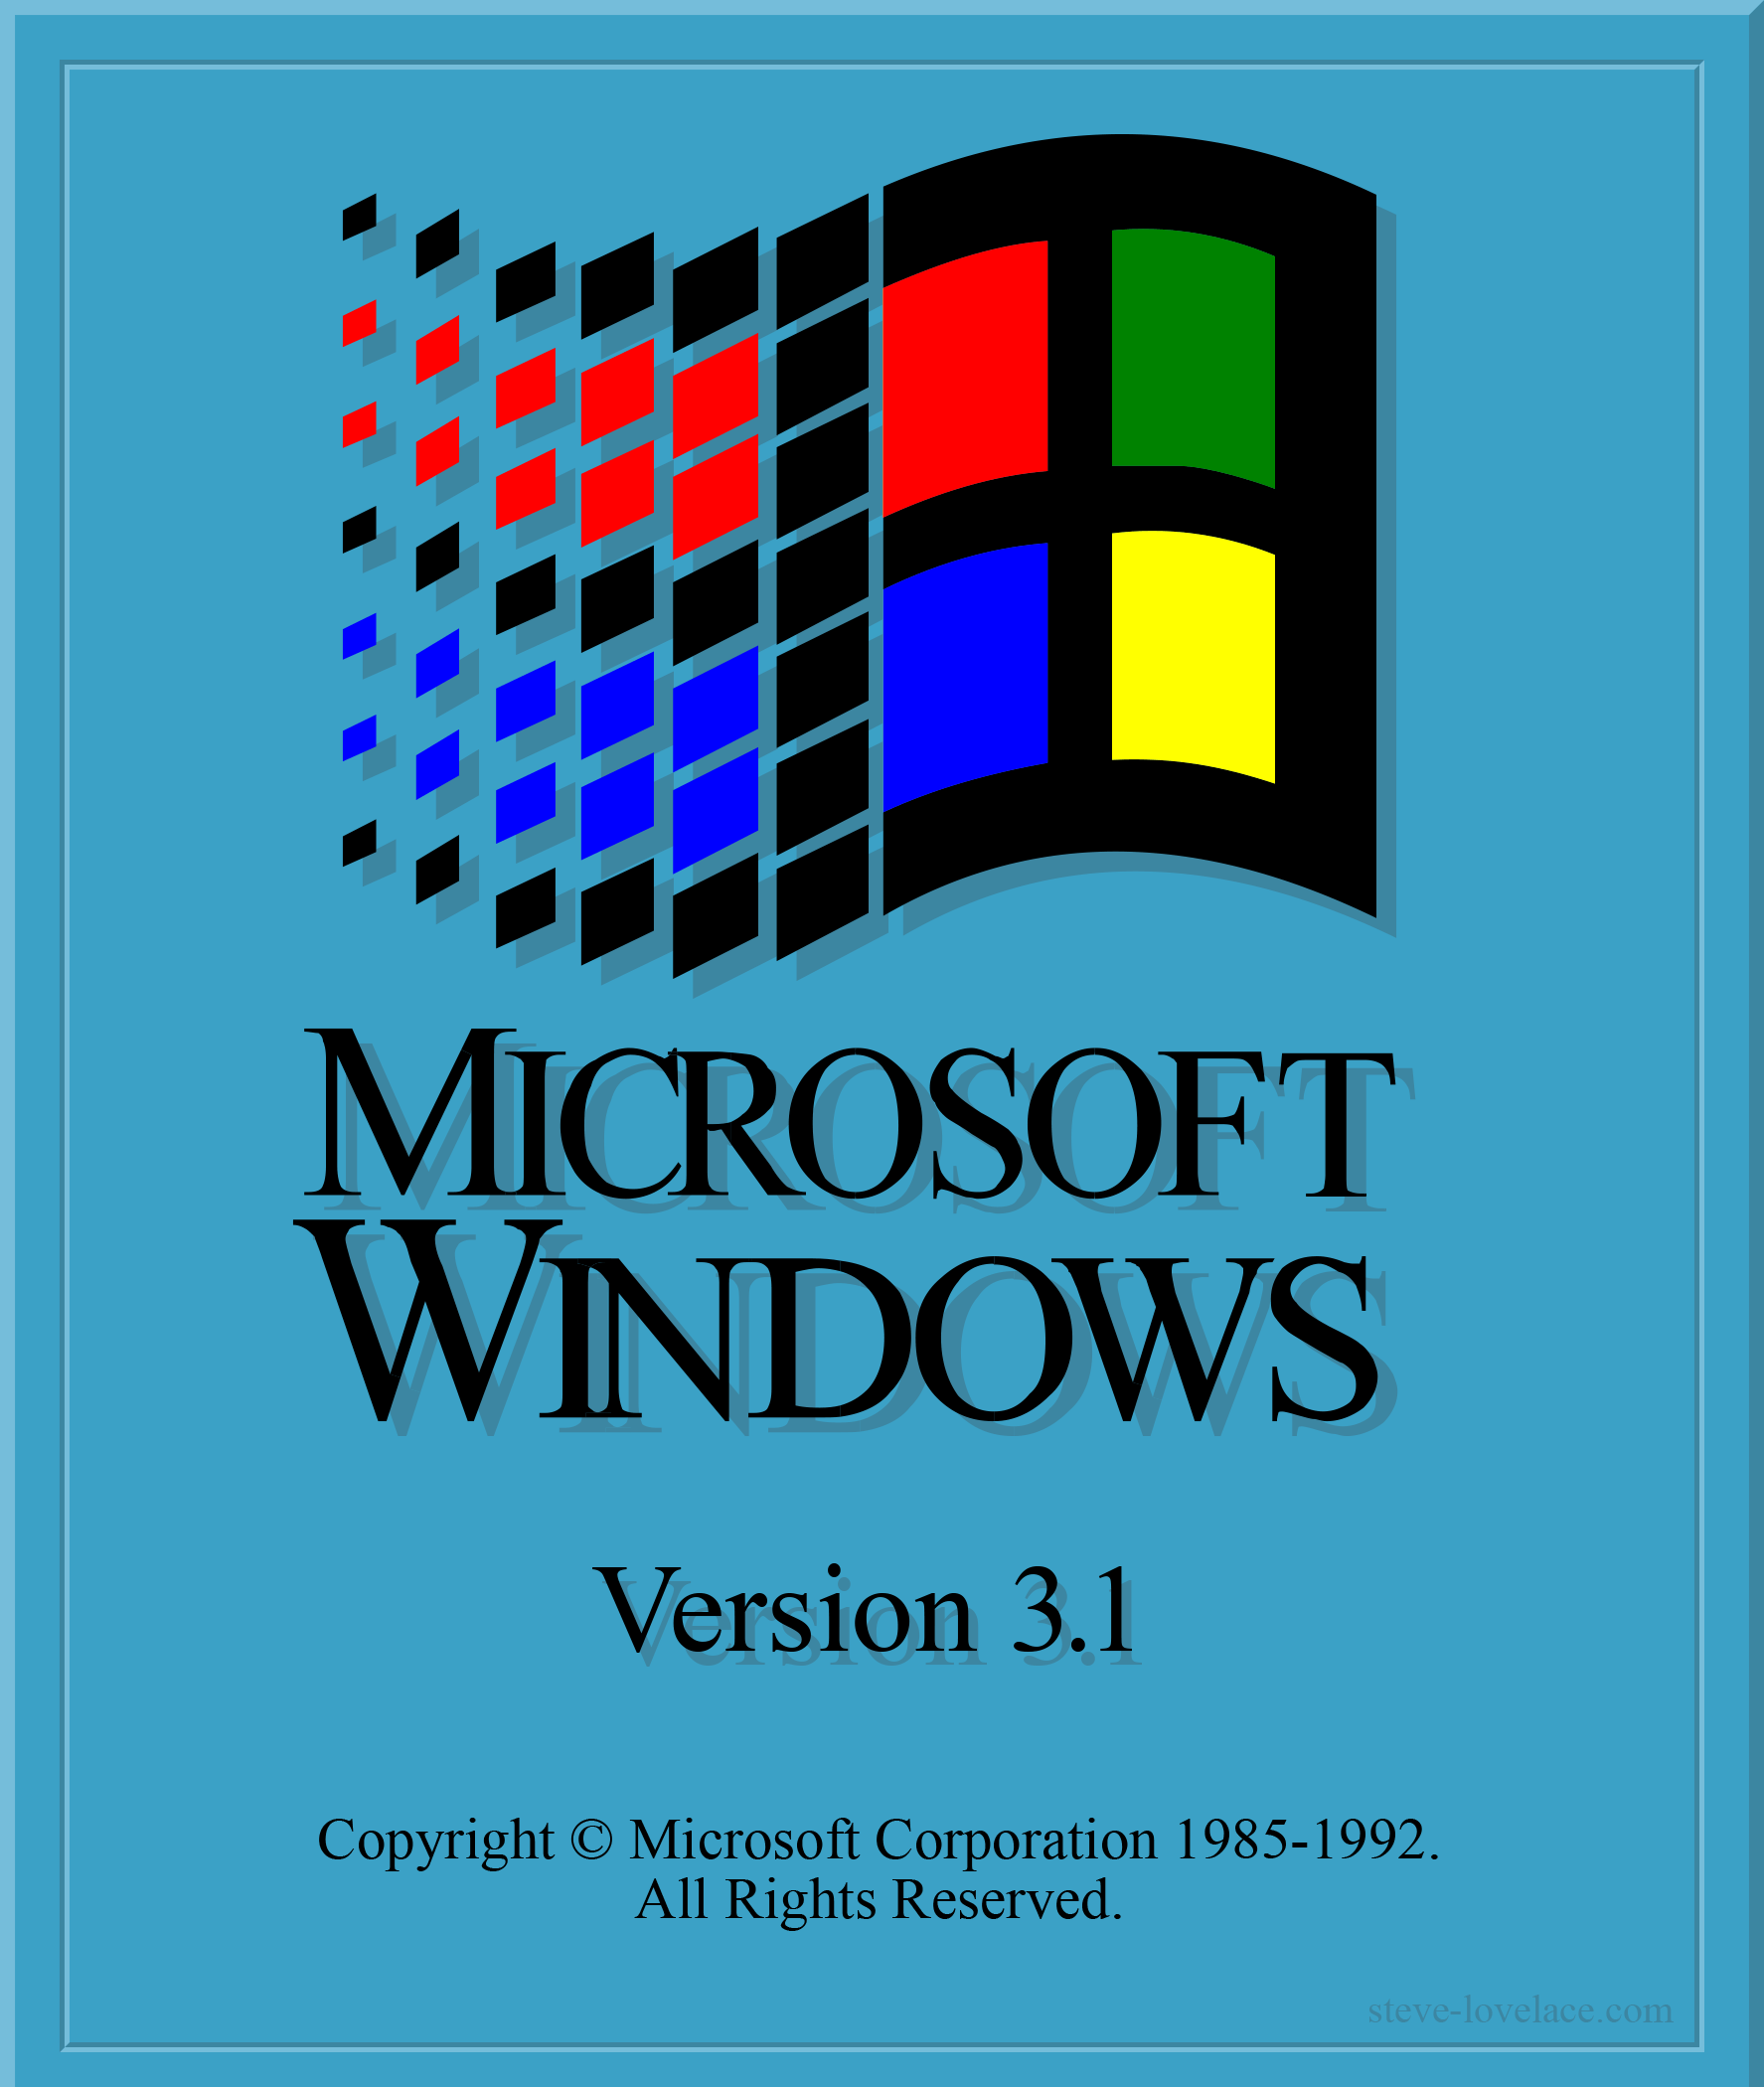 Microsoft Windows NT Logo - The Rise of Microsoft Windows NT — Steve Lovelace